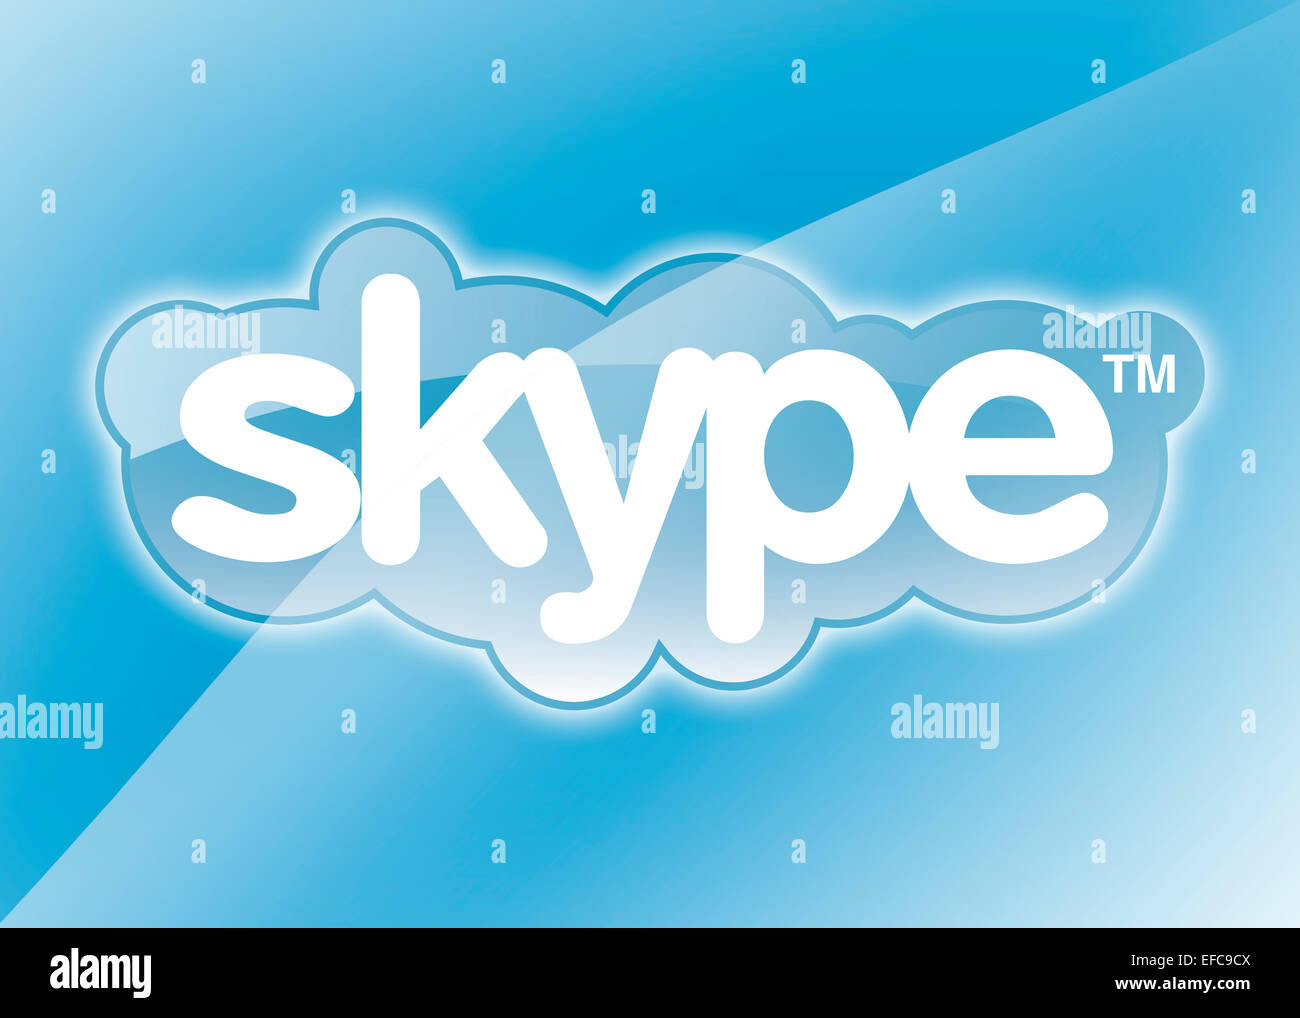 skype stock